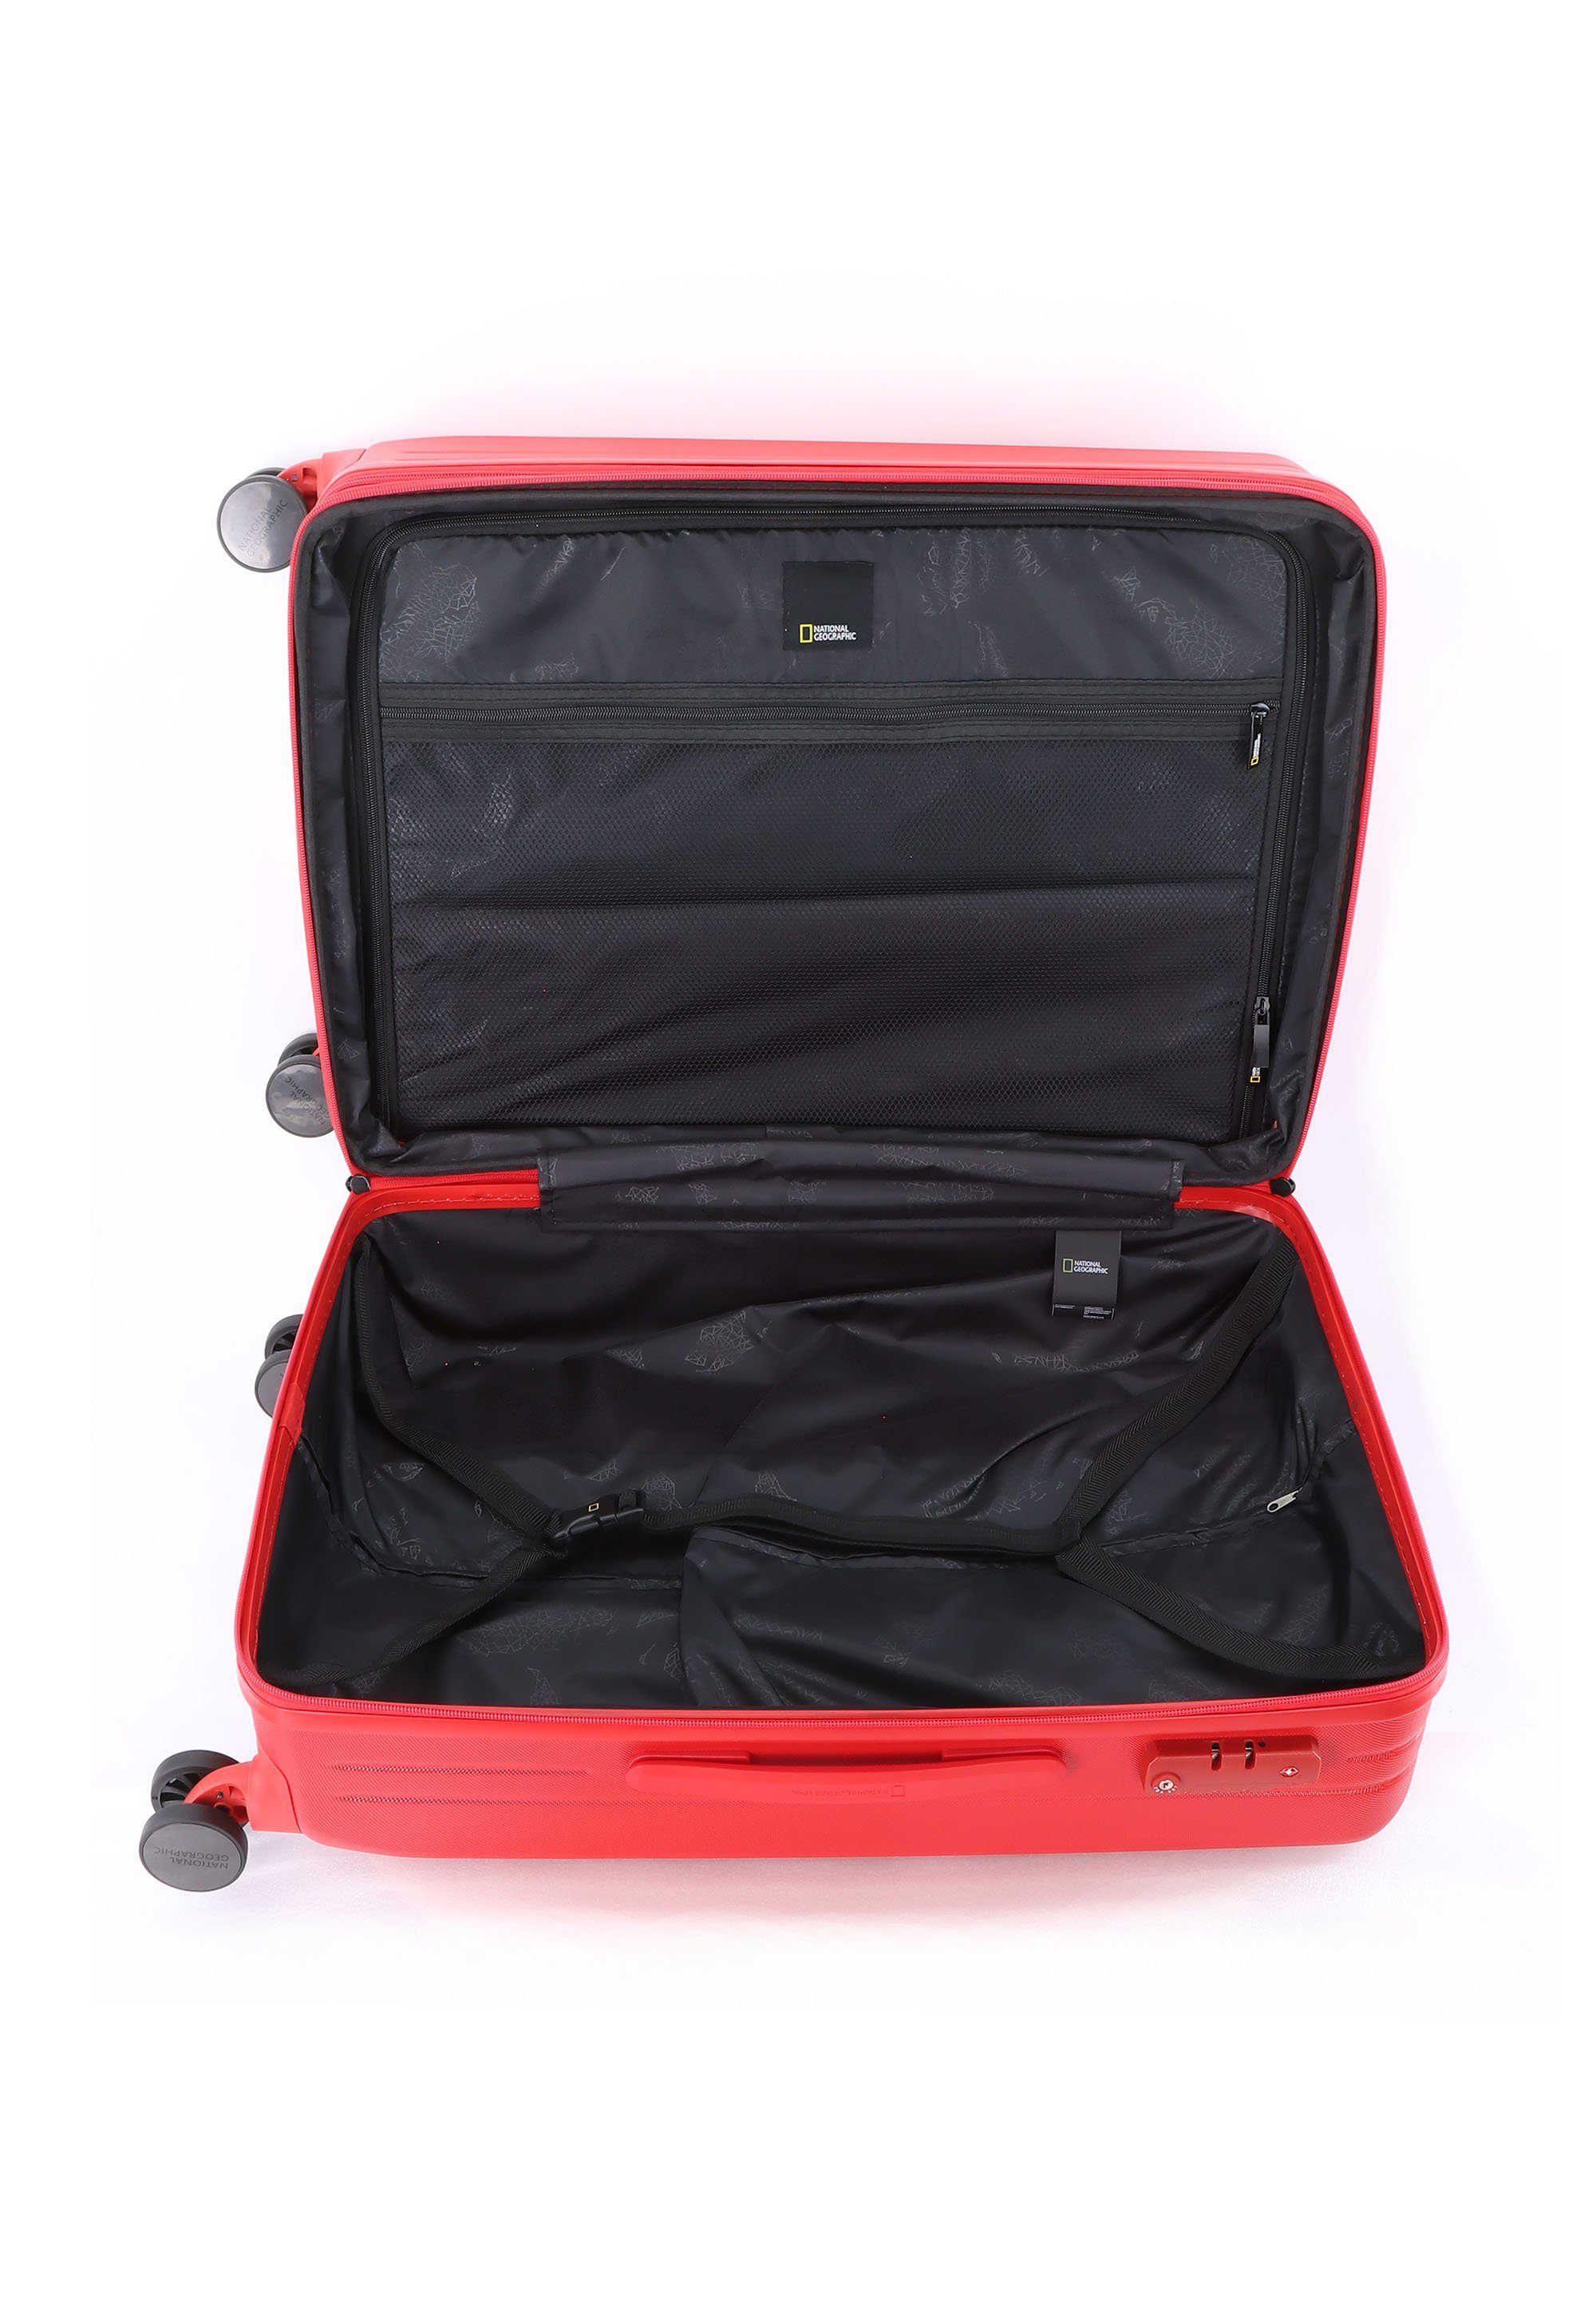 Koffer ABS-Material aus hergestellt NATIONAL dem Pulse, GEOGRAPHIC